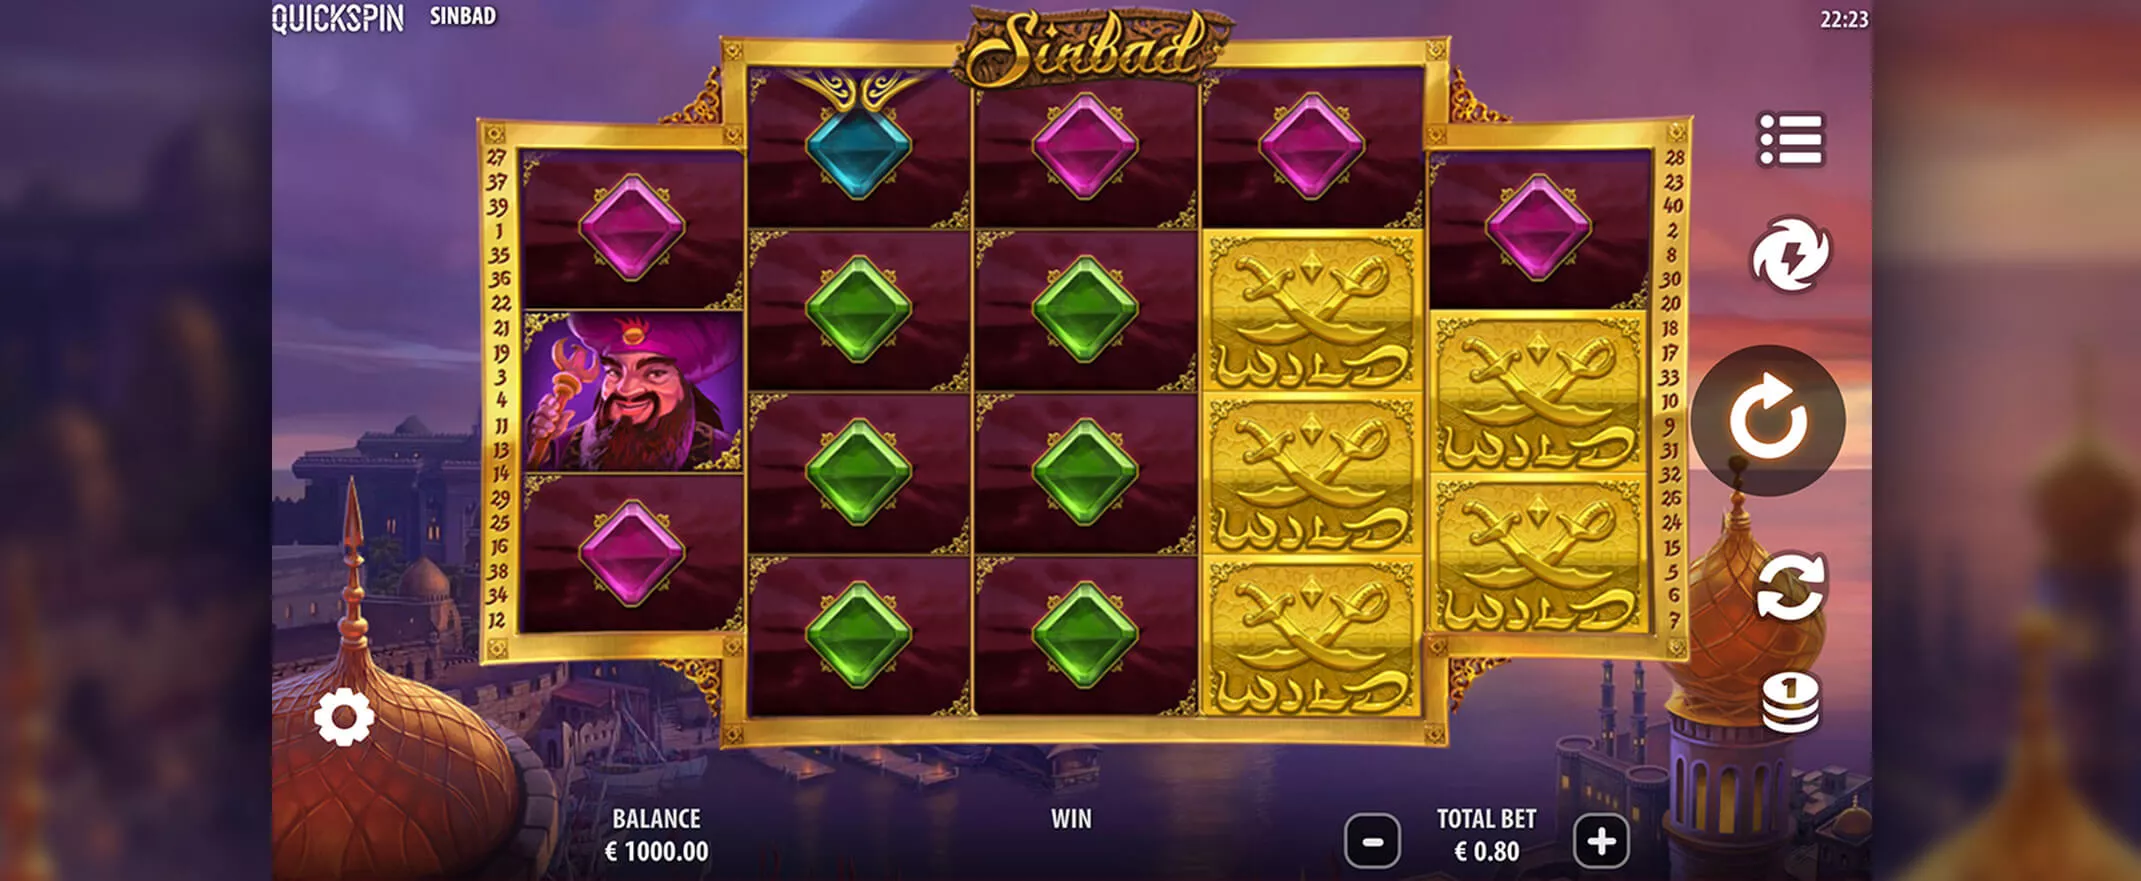 Sinbad slot screenshot of the reels